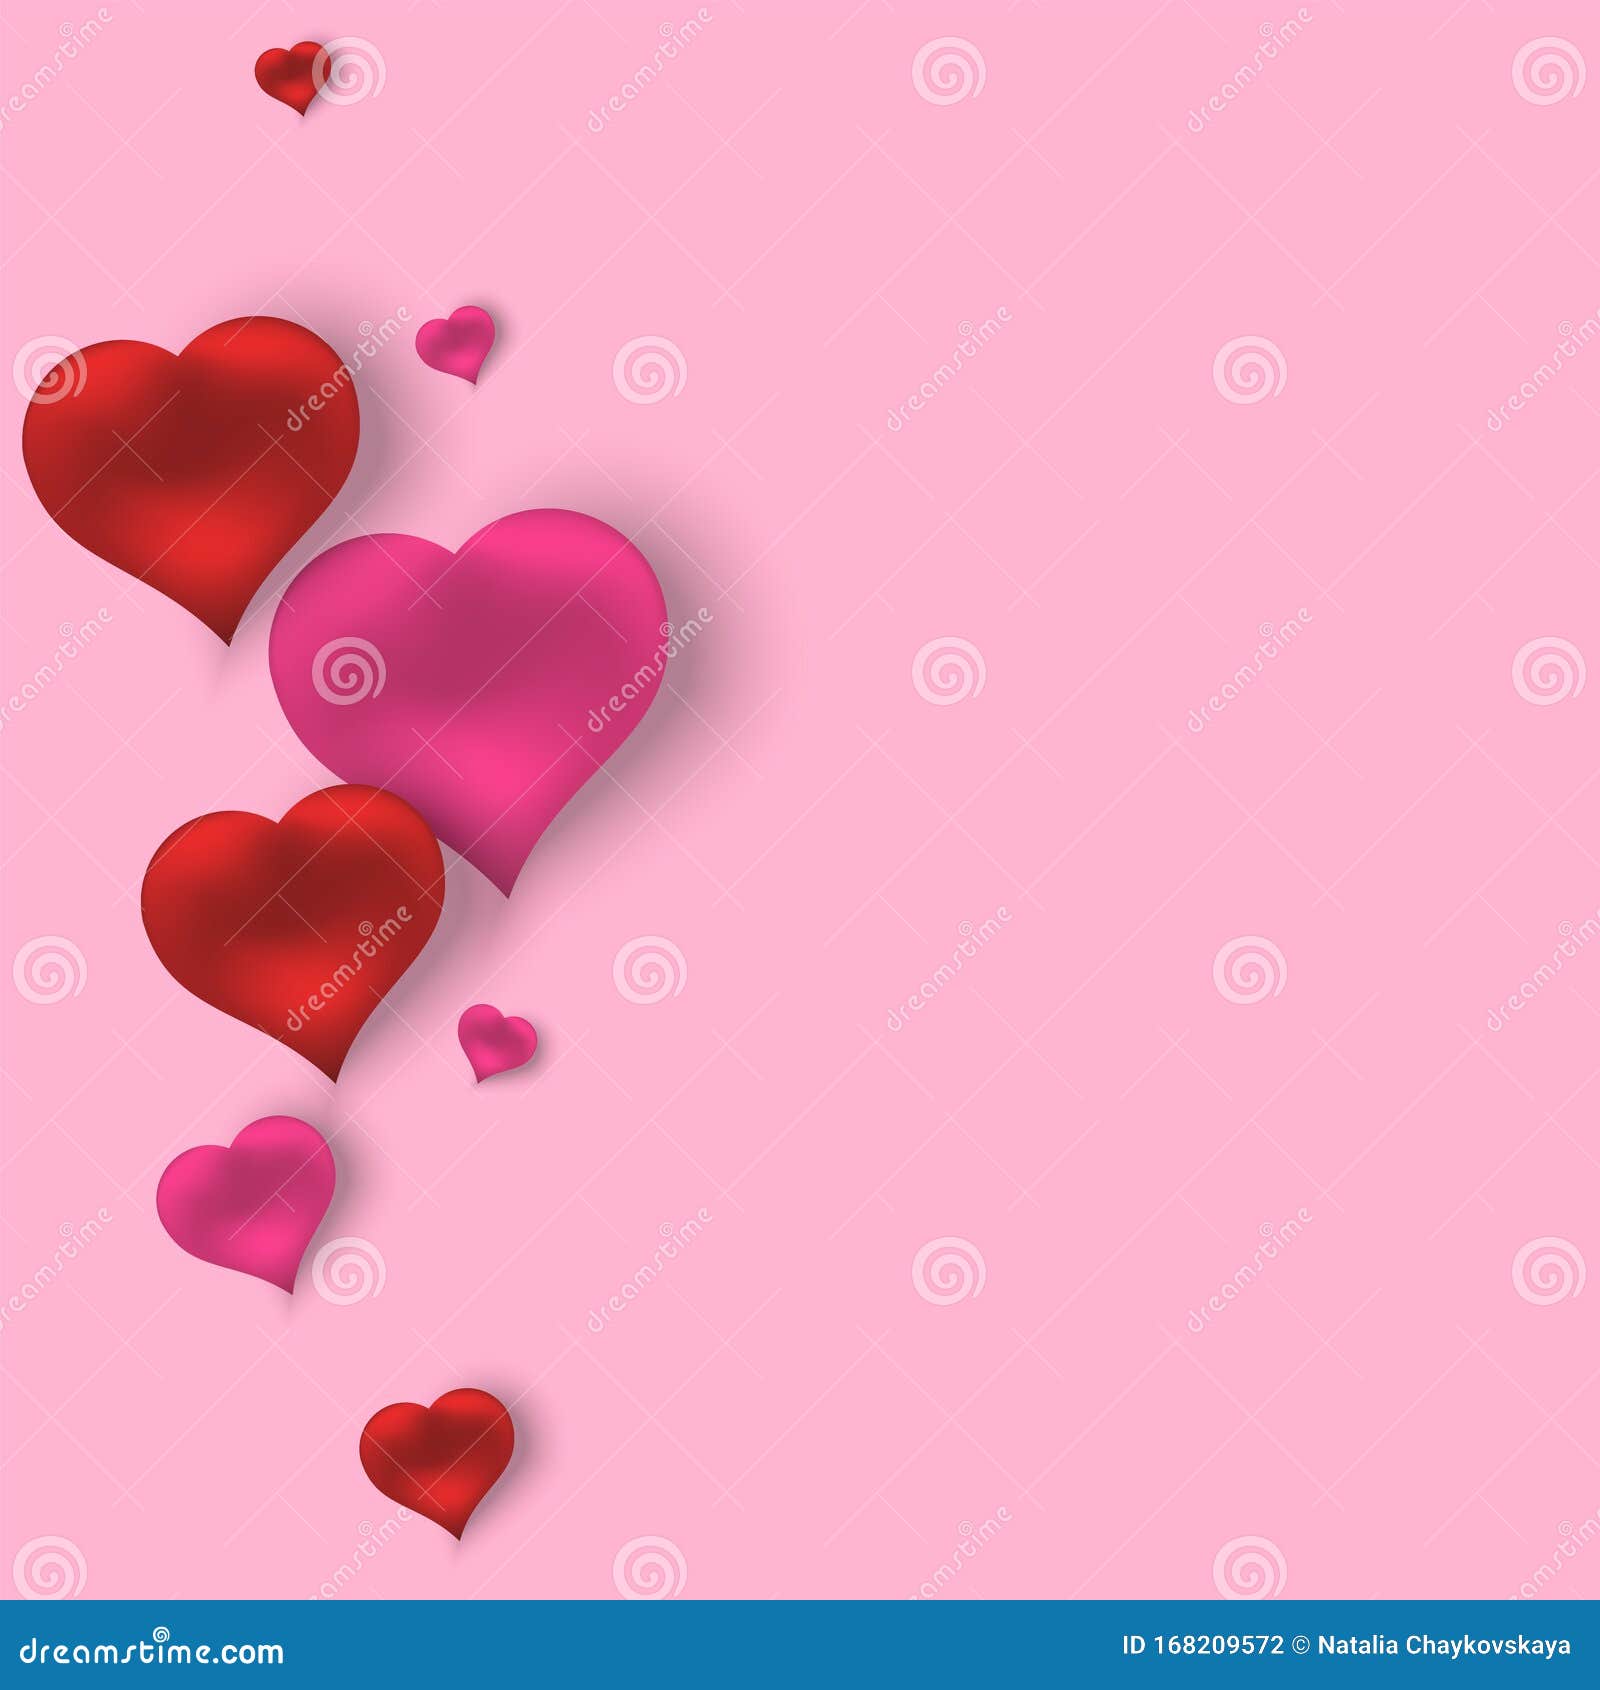 Random Love Symbols Background Stock Vector Royalty Free 553592137   Shutterstock